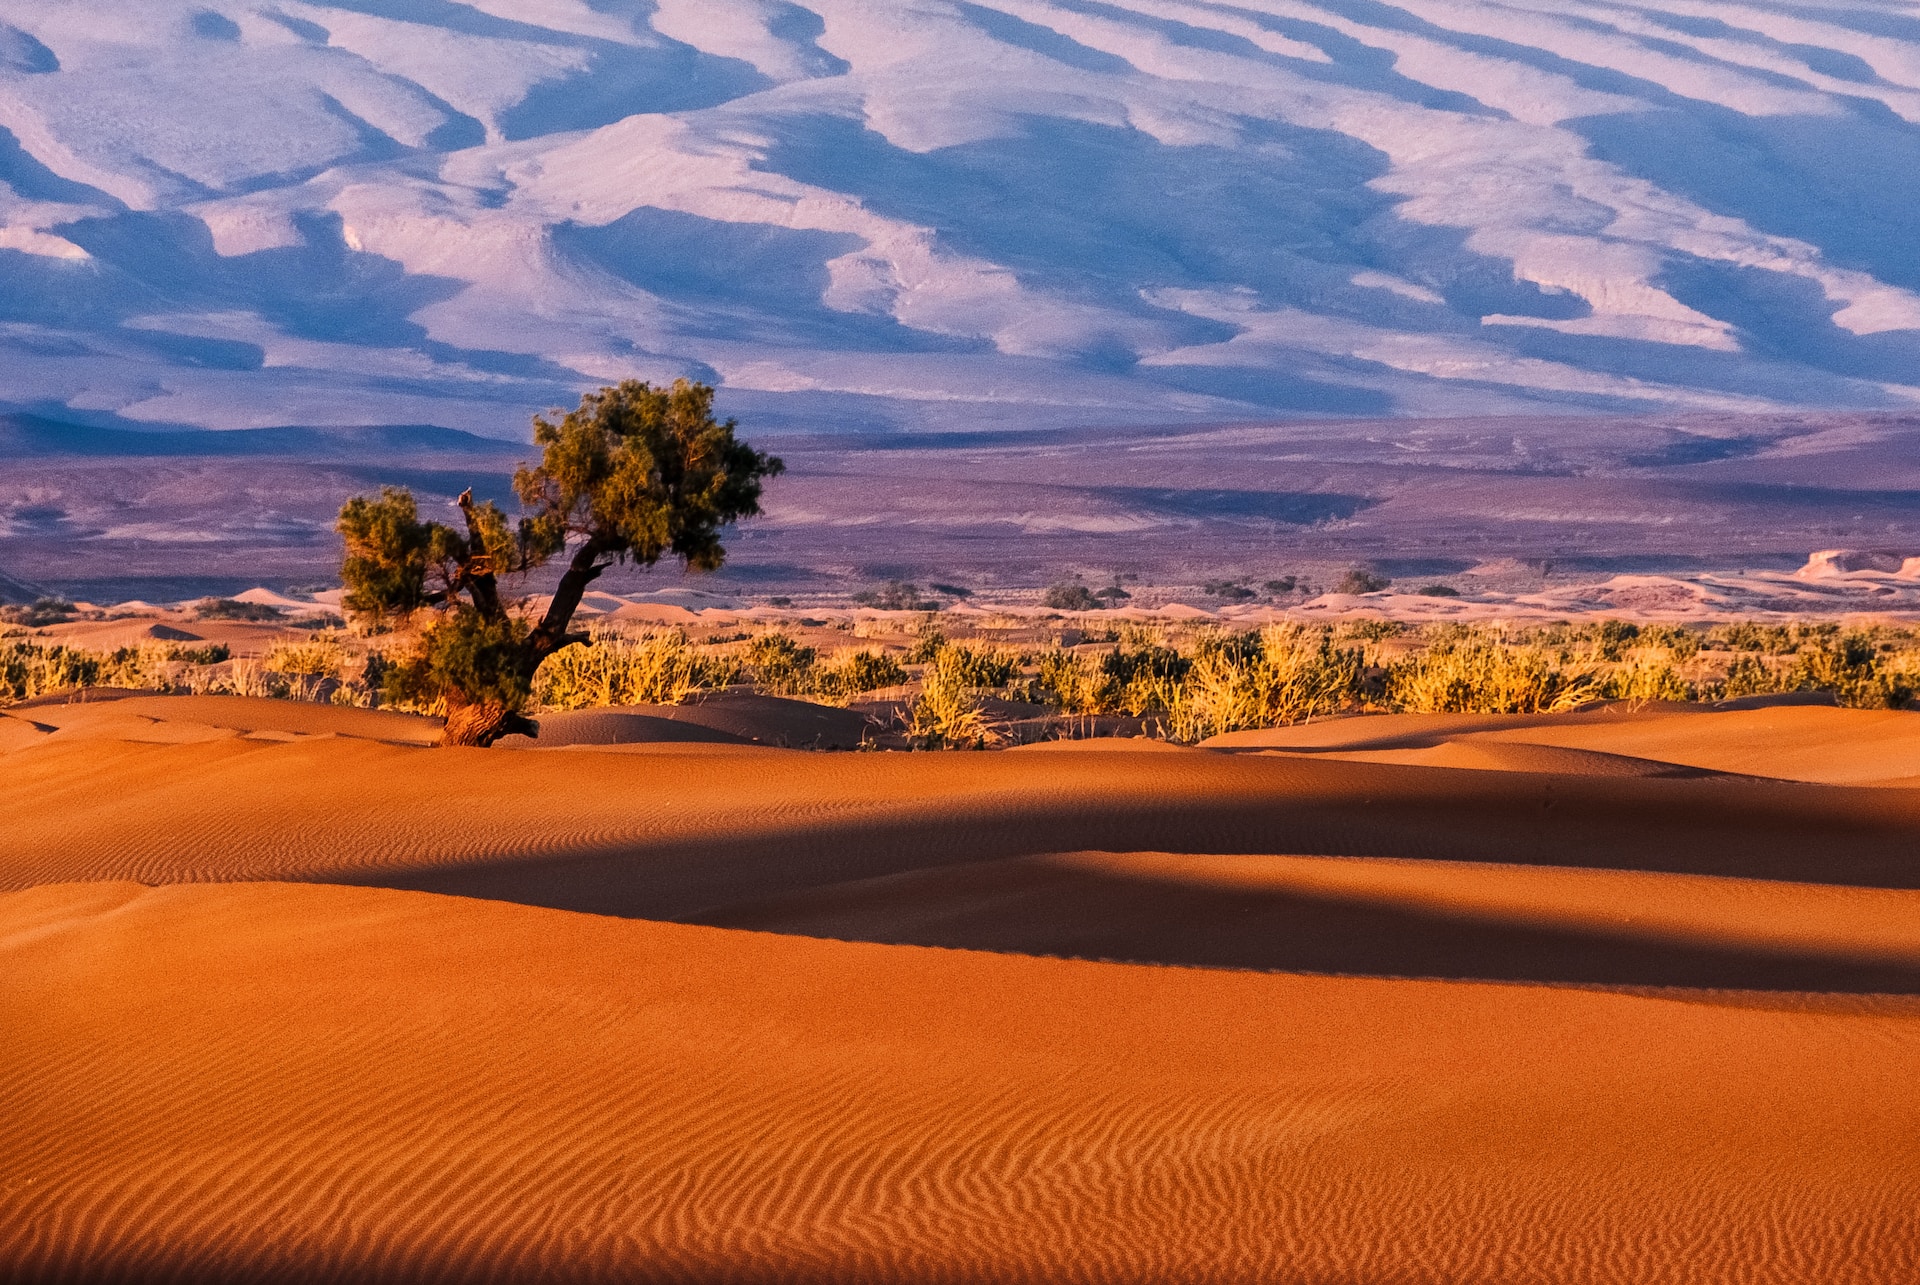 Sahara circular gardens: An innovative response to ongoing desertification and food security.